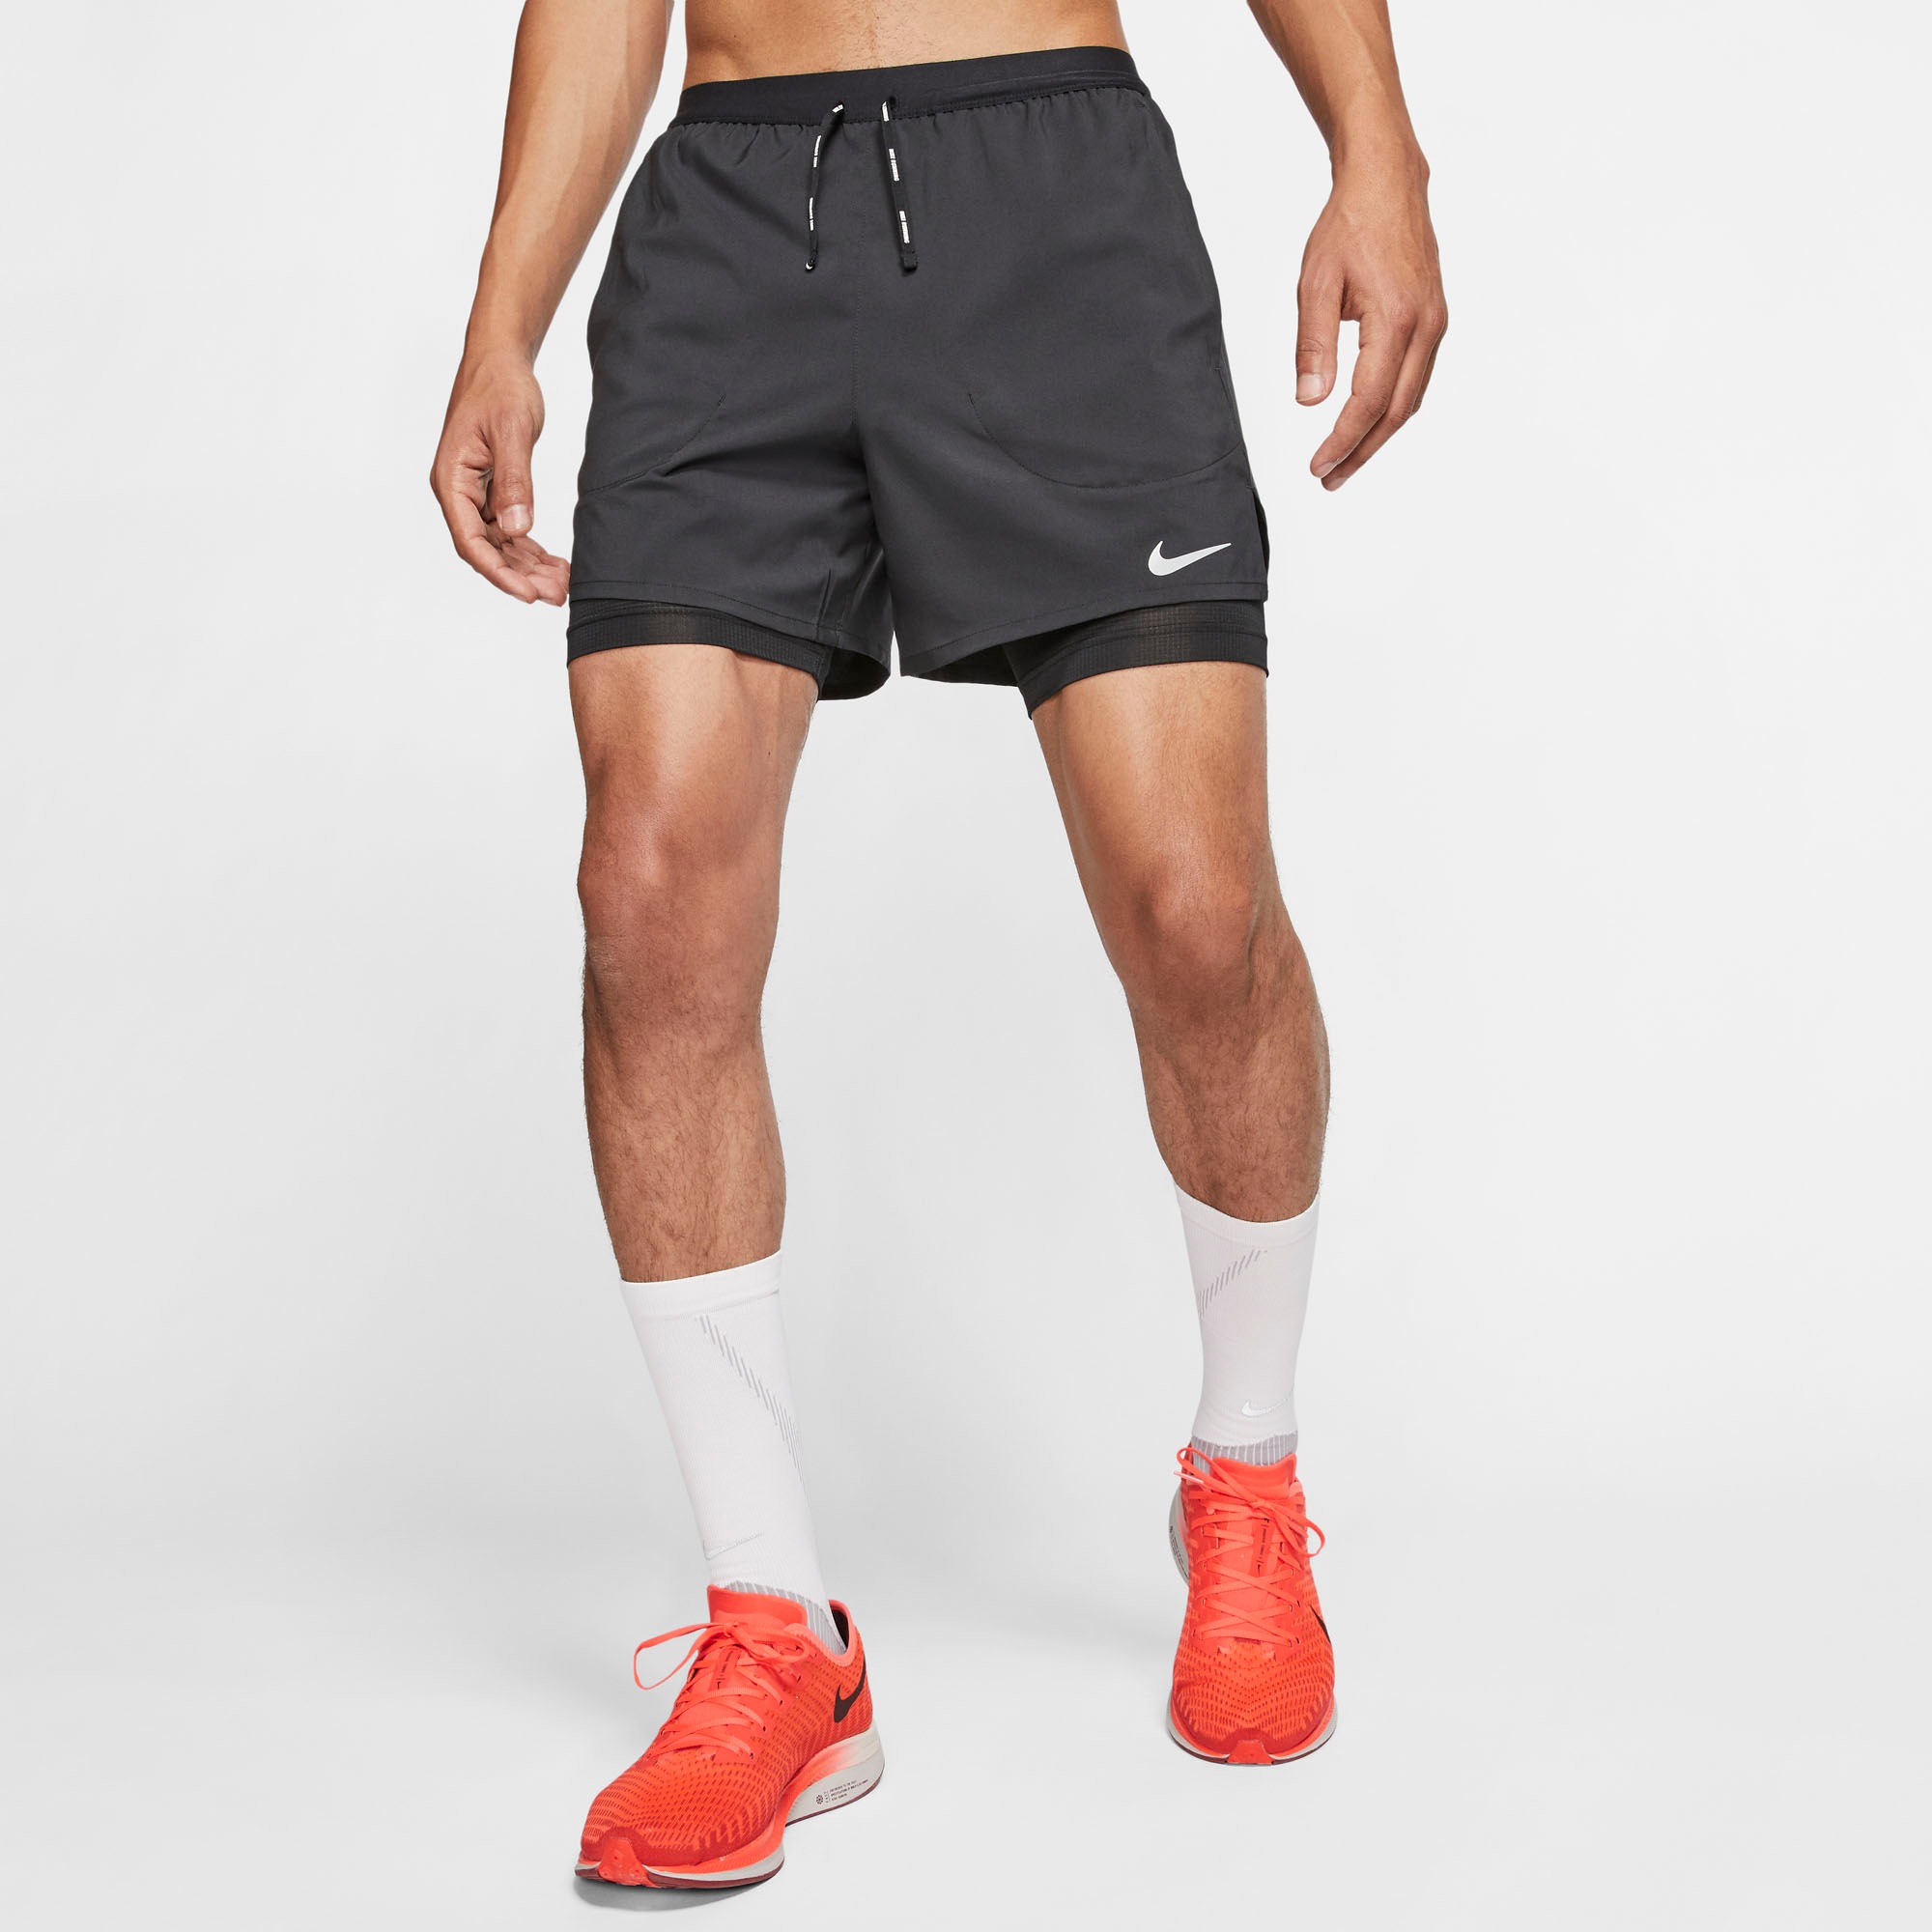 nike men's flex stride shorts 5 in